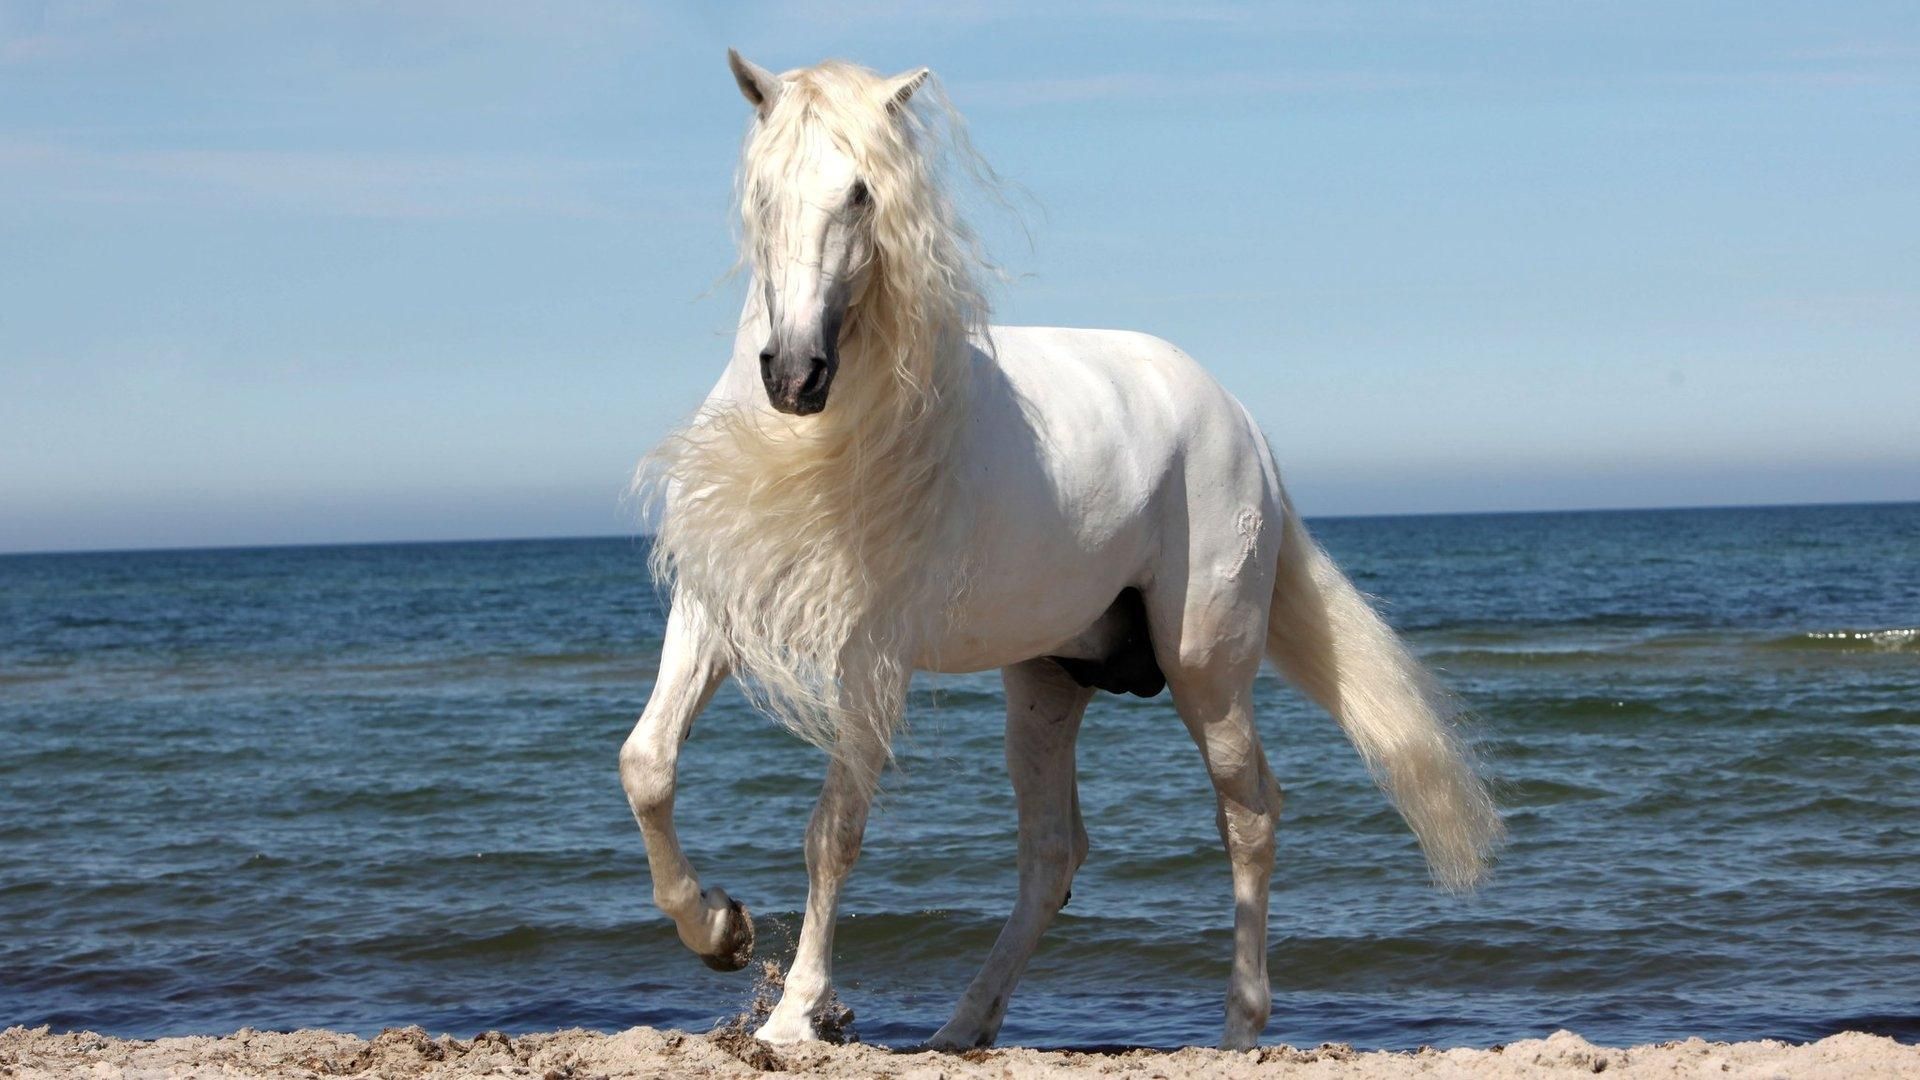 Image Of Beautiful Horses Horse I Ld Rather Be